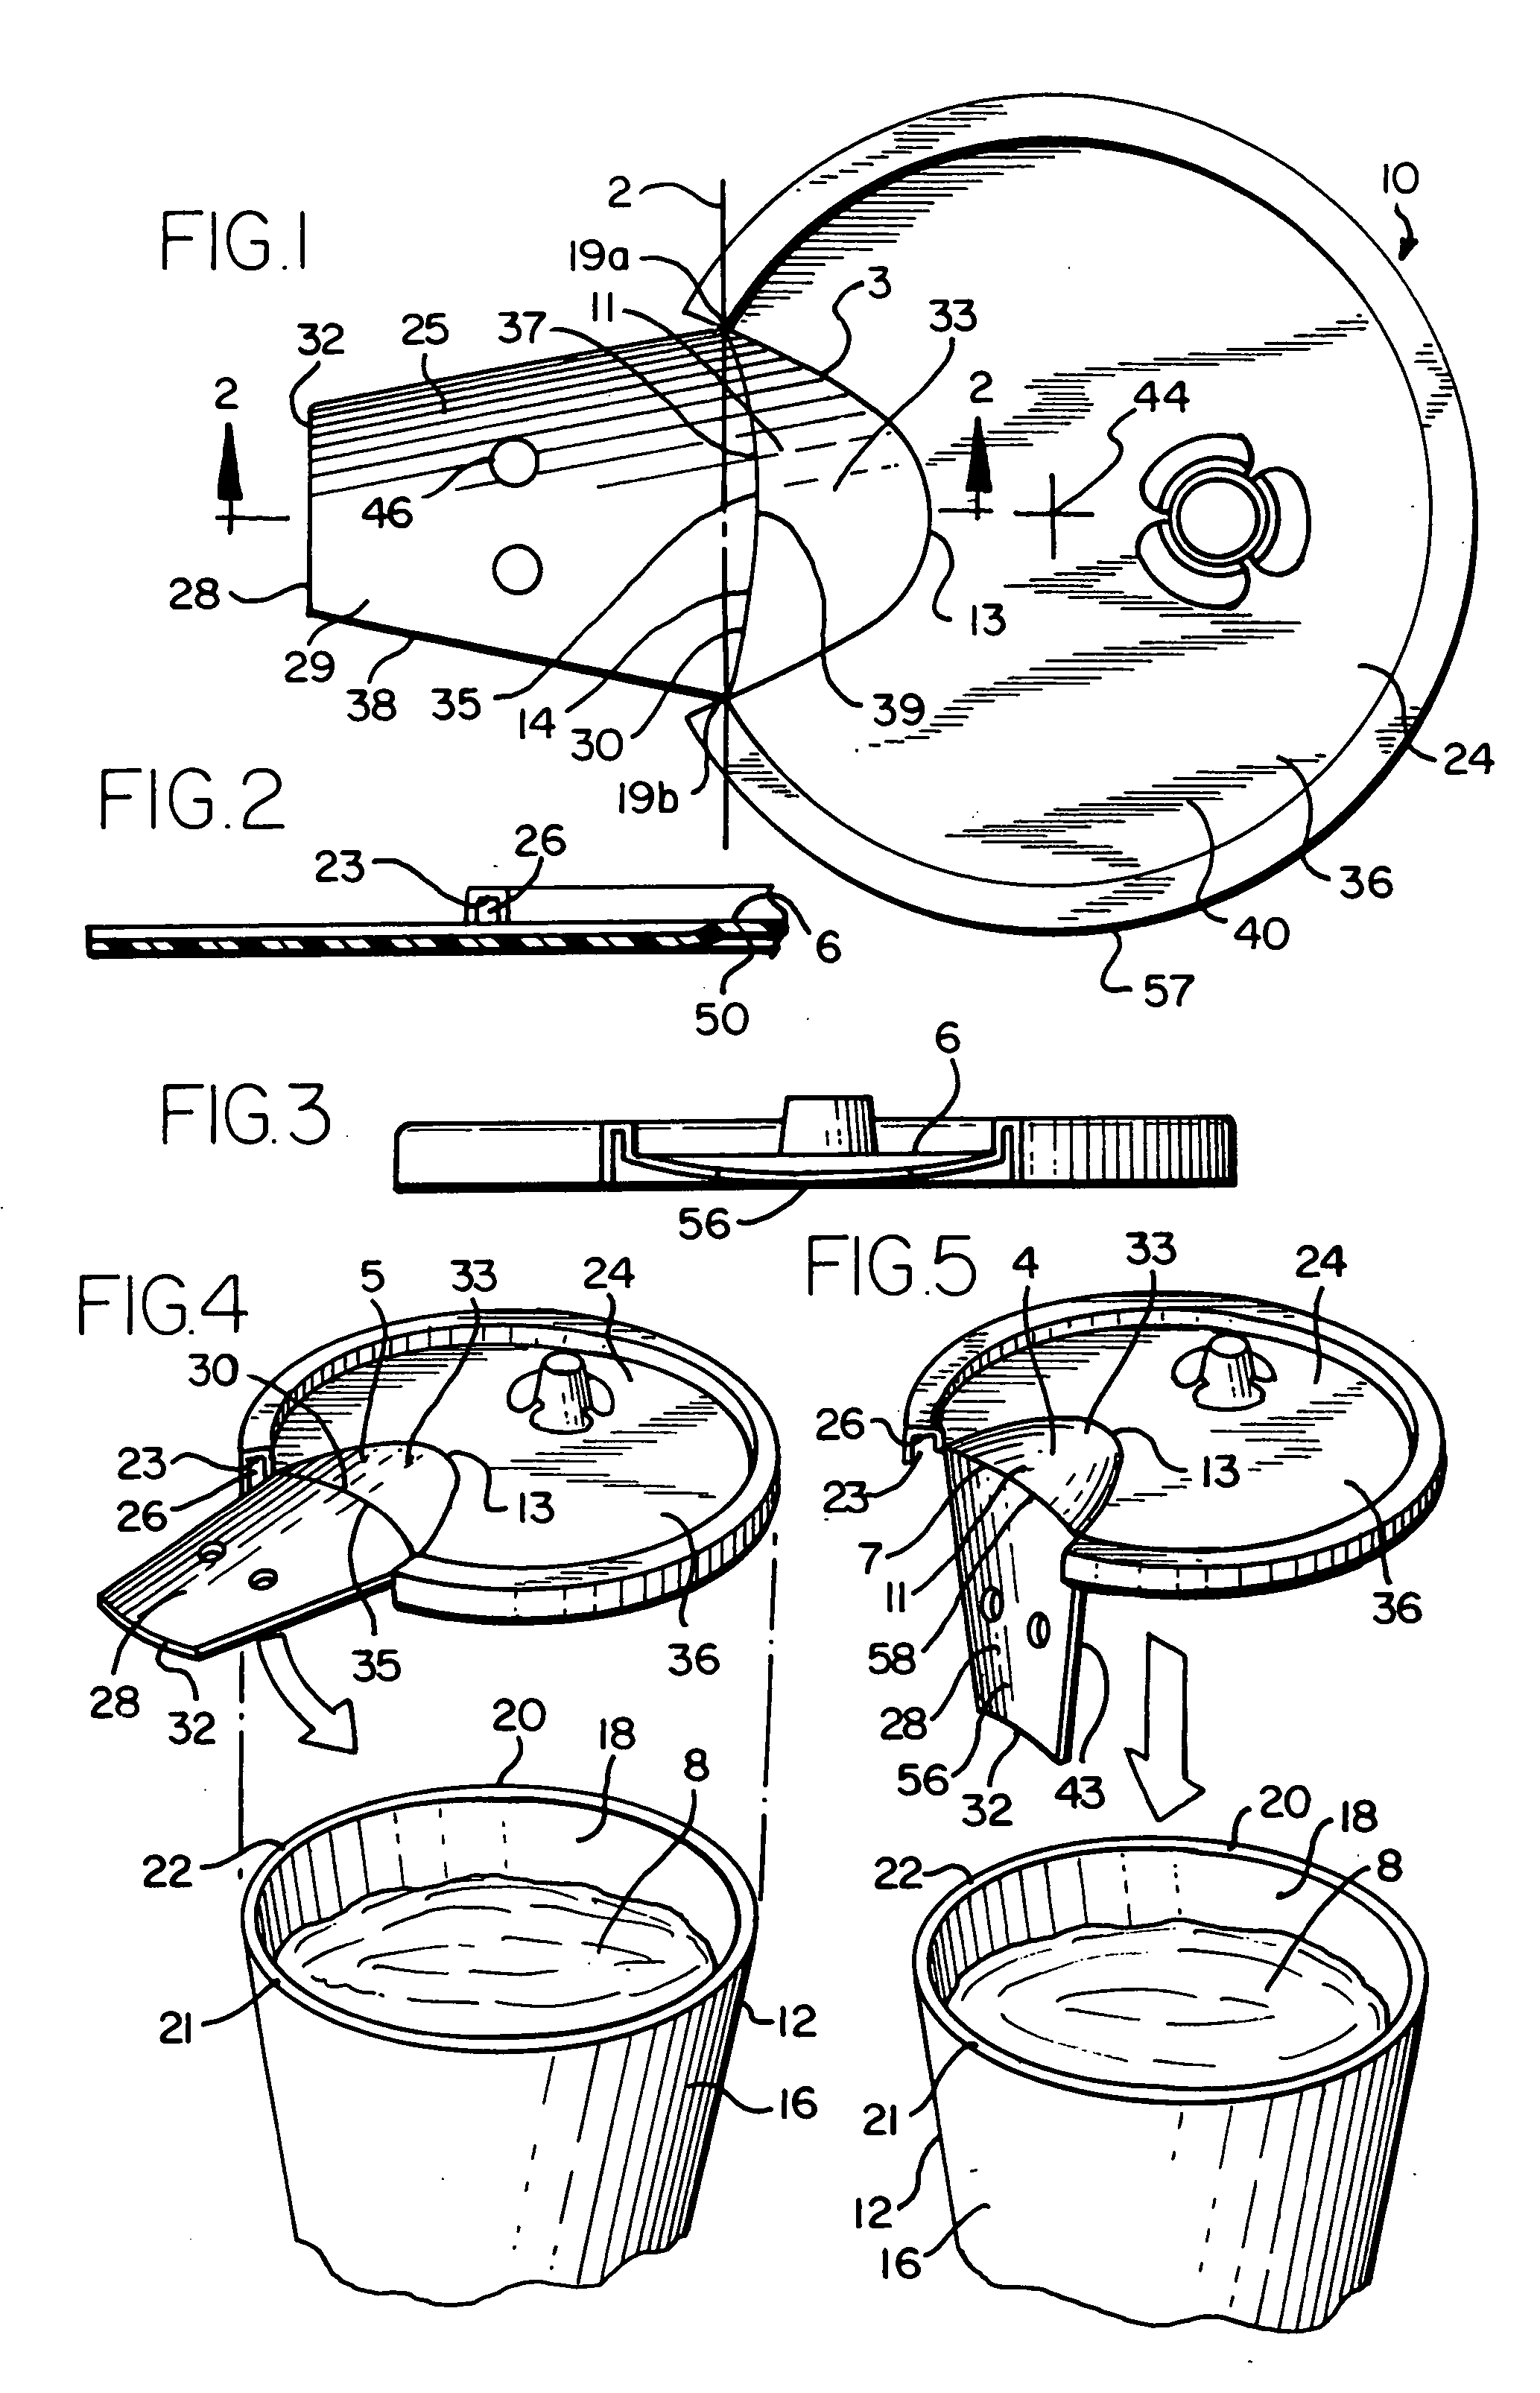 Cup lid apparatus